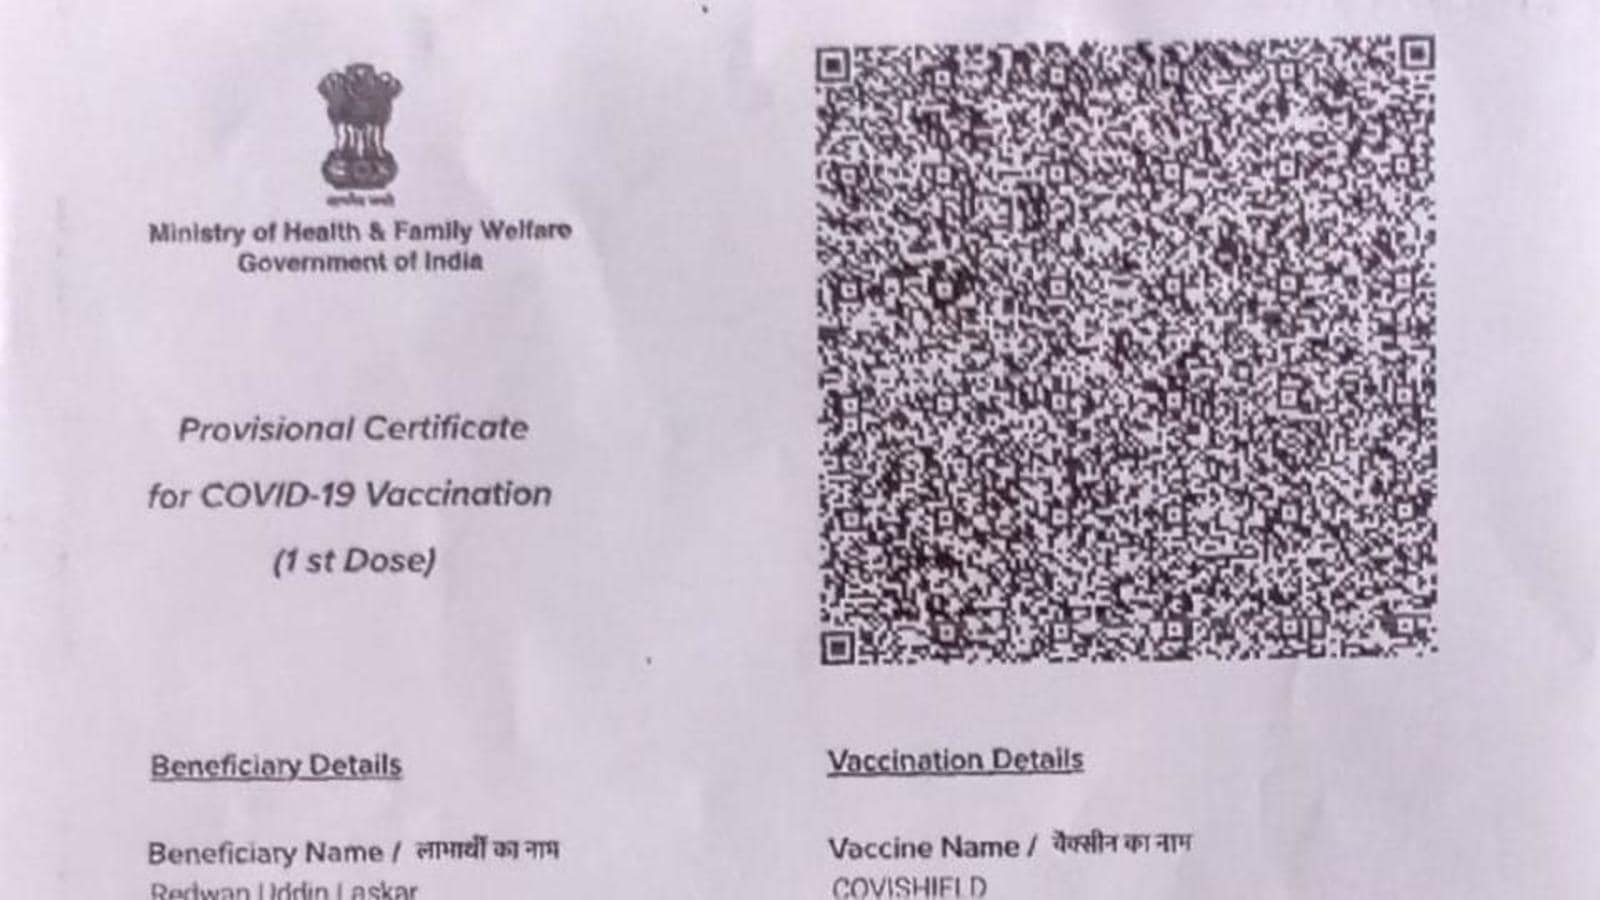 covid vaccination card hipaa